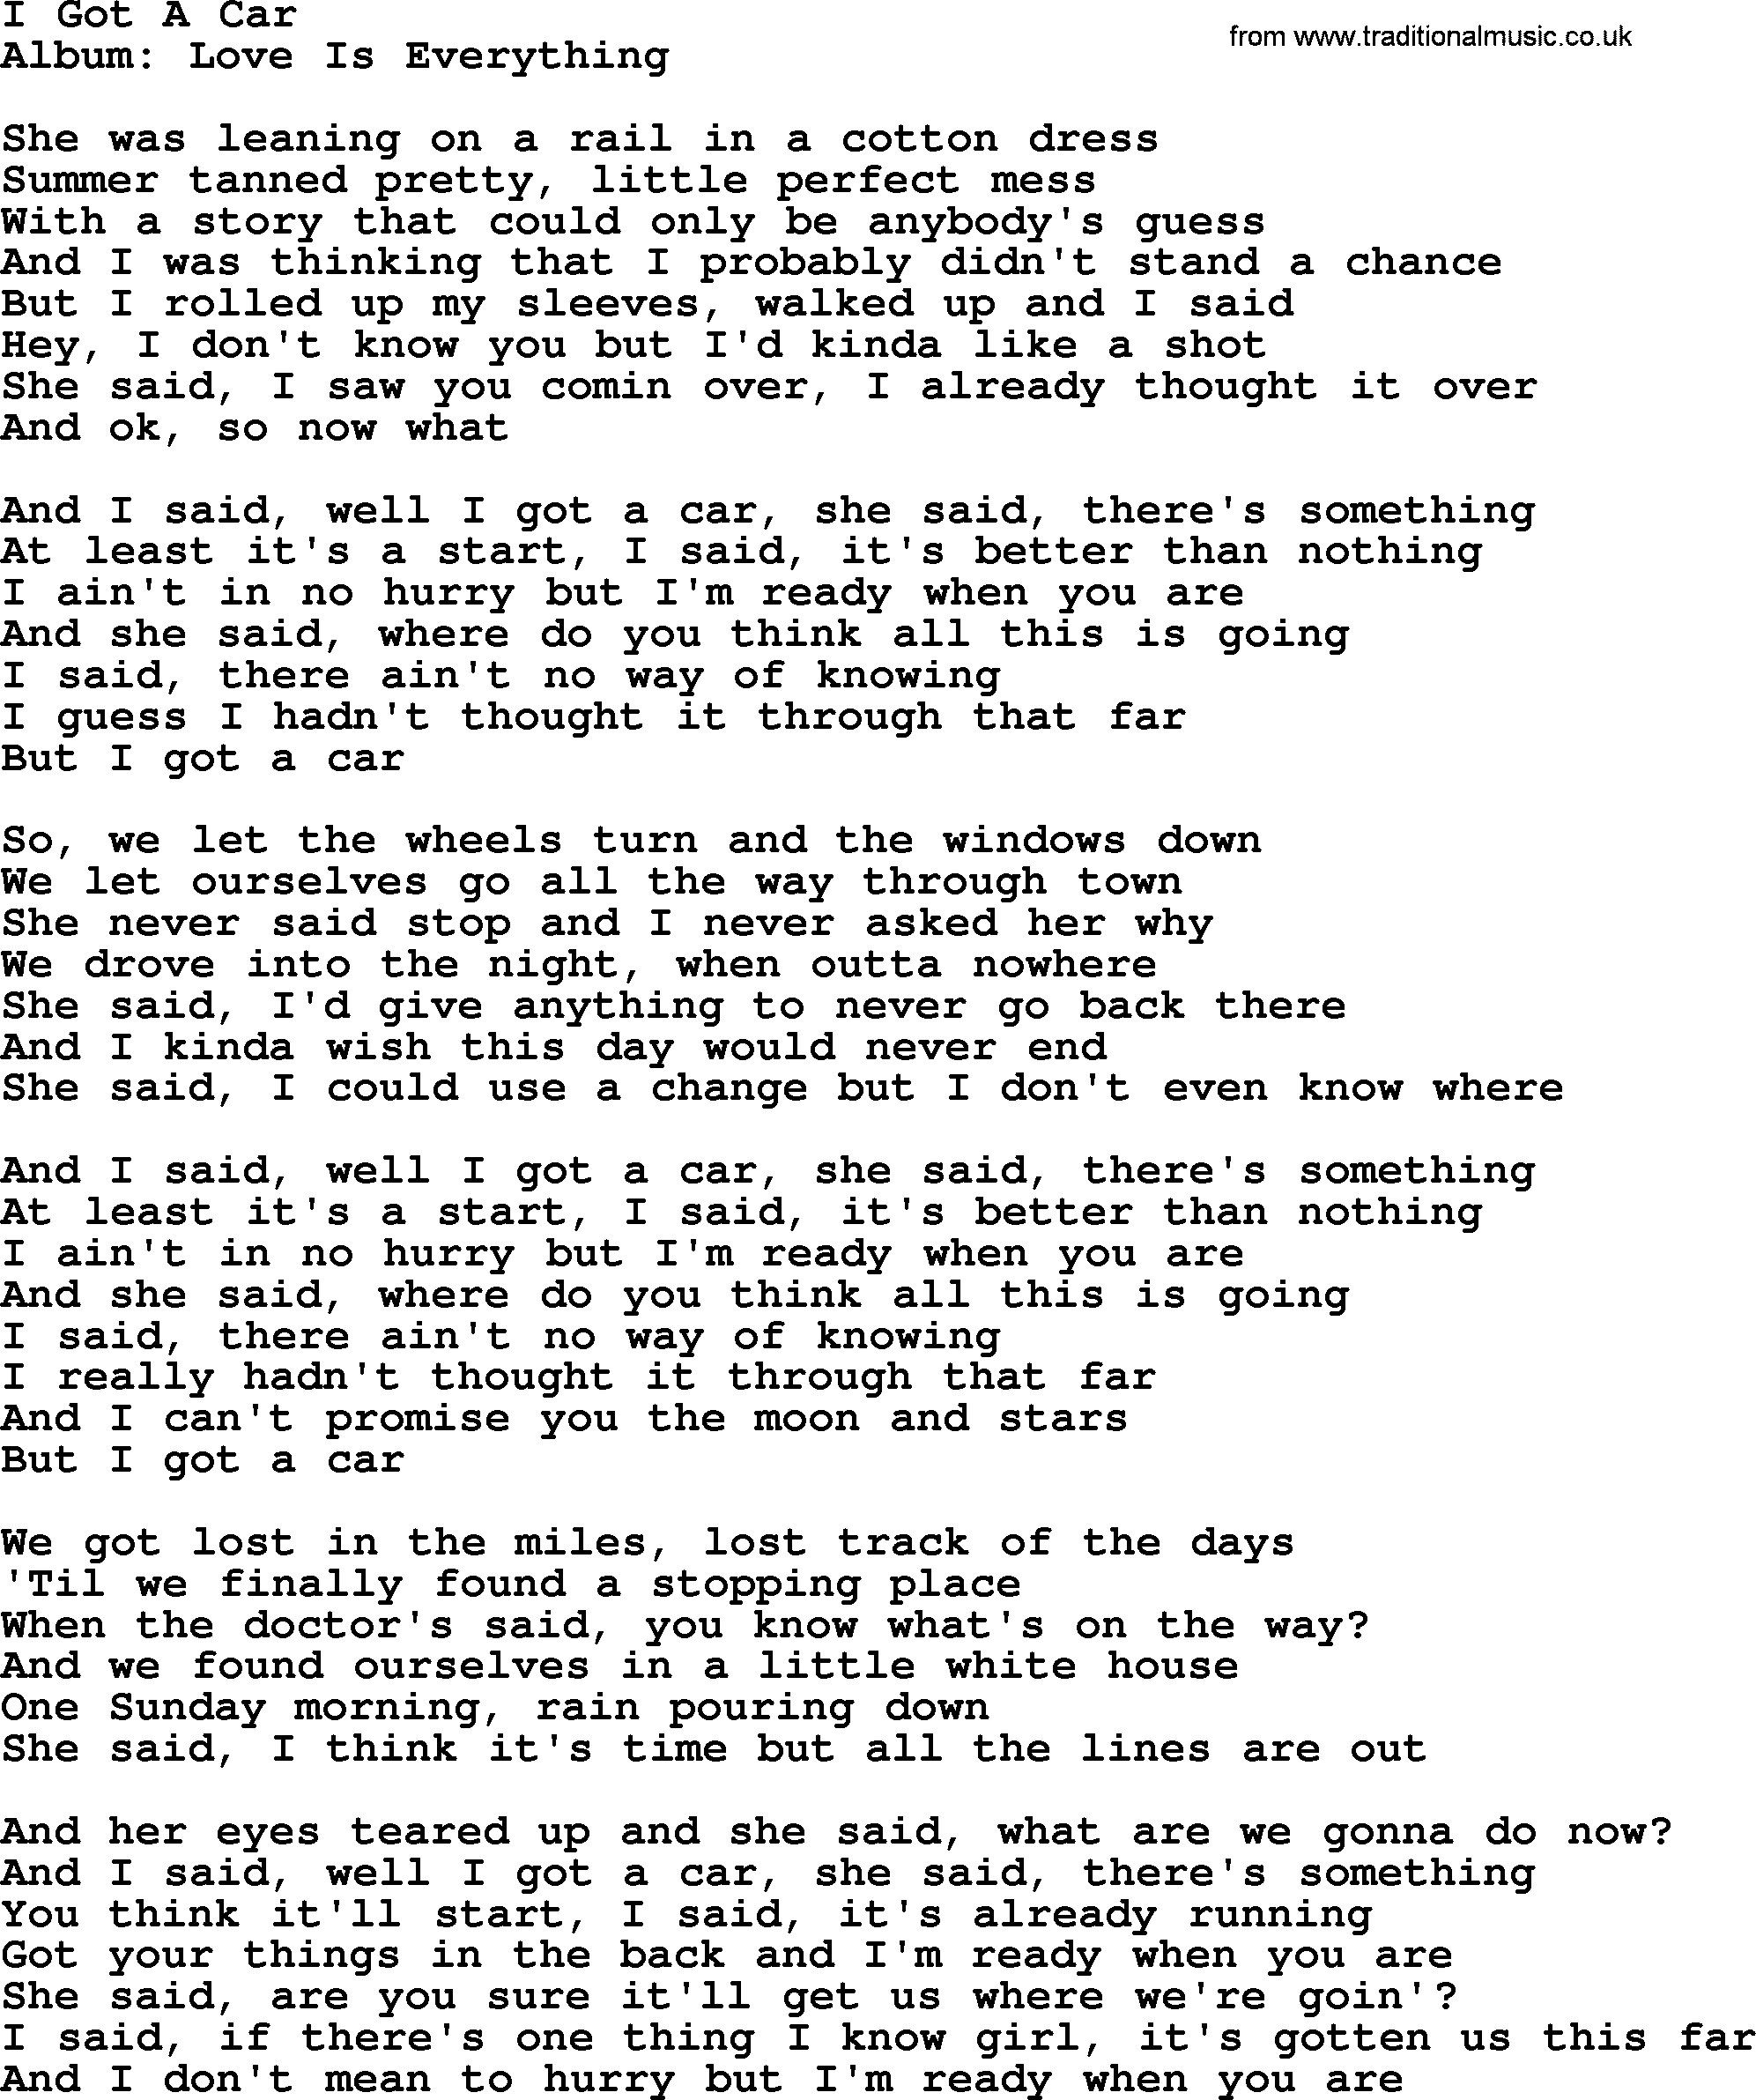 George Strait song: I Got A Car, lyrics